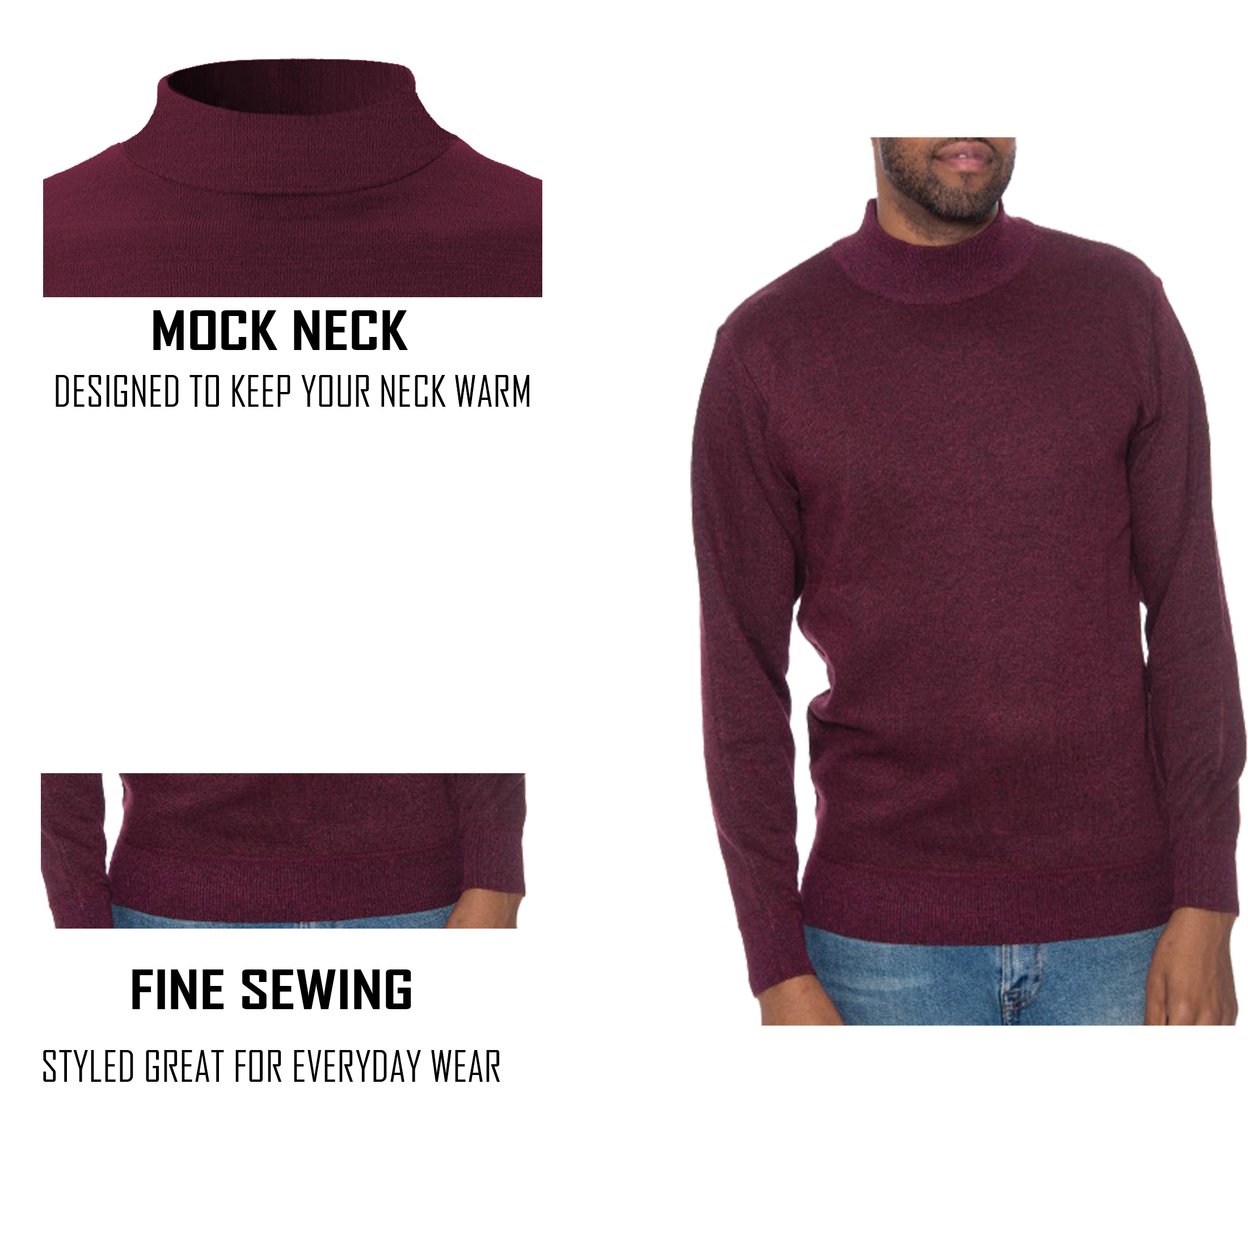 2-Pack: Men's Winter Warm Cozy Knit Slim Fit Mock Neck Sweater - Black & White, X-large